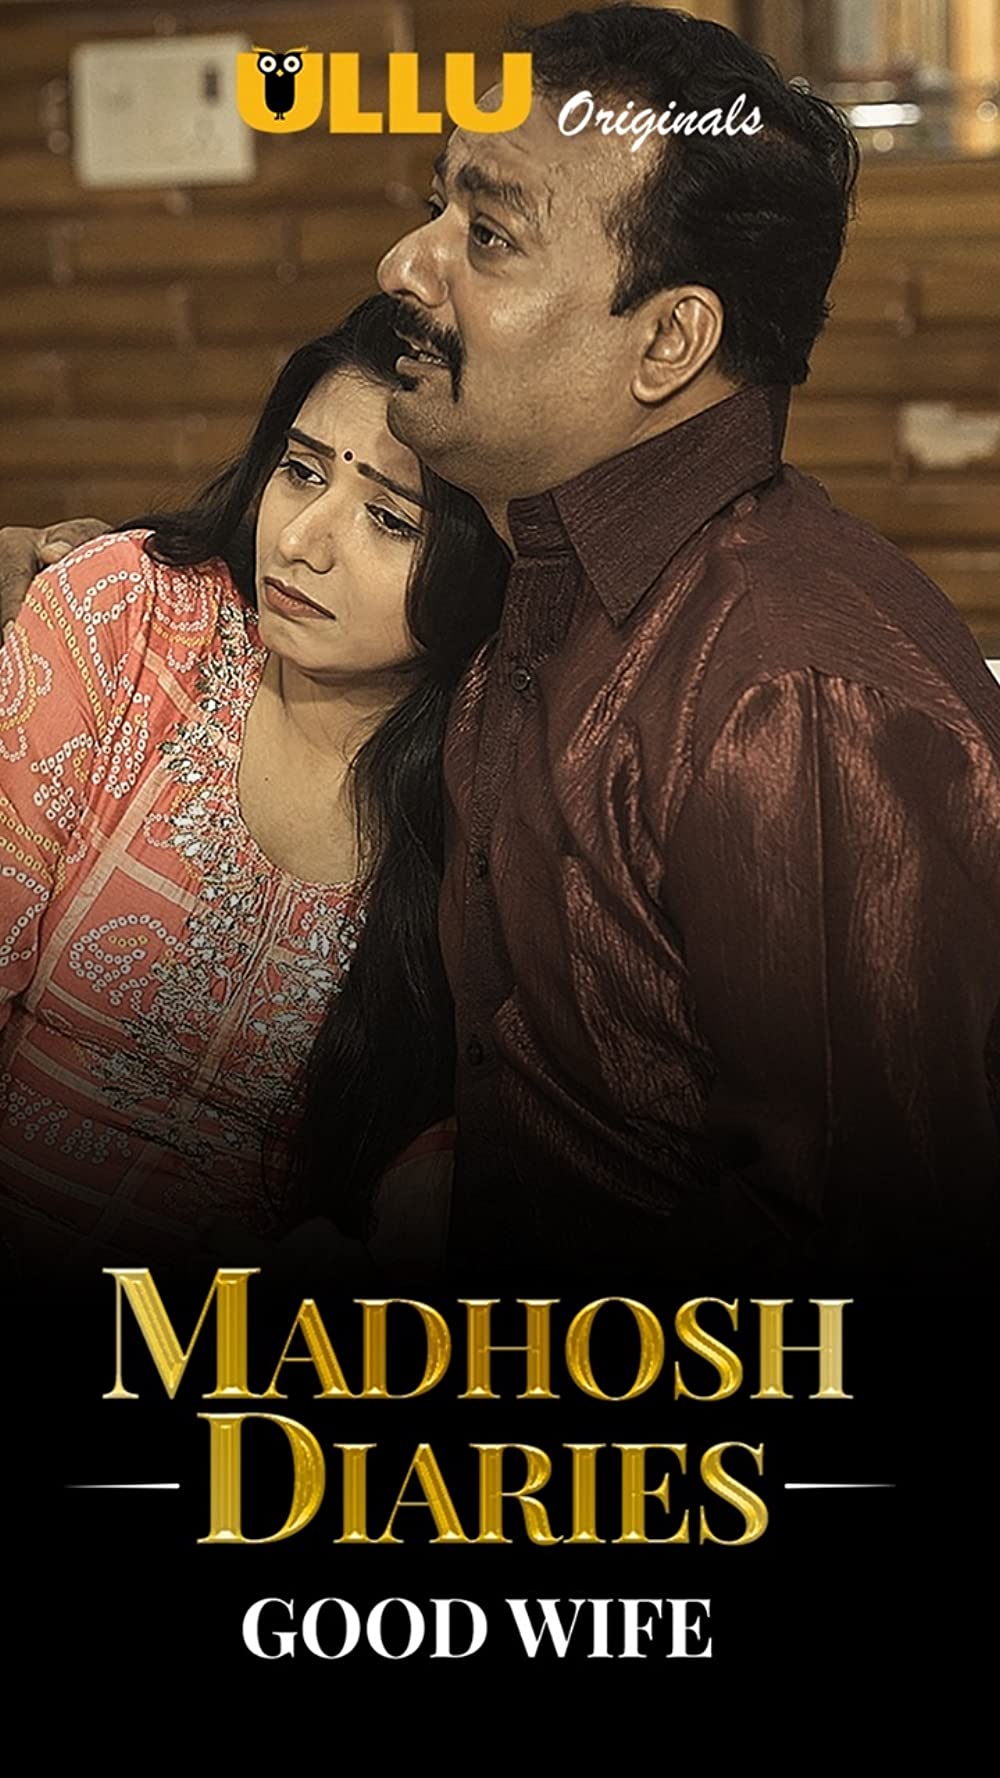 18+ Madhosh Diaries (Good Wife) Hindi Ullu Web Series 1080p Watch Online